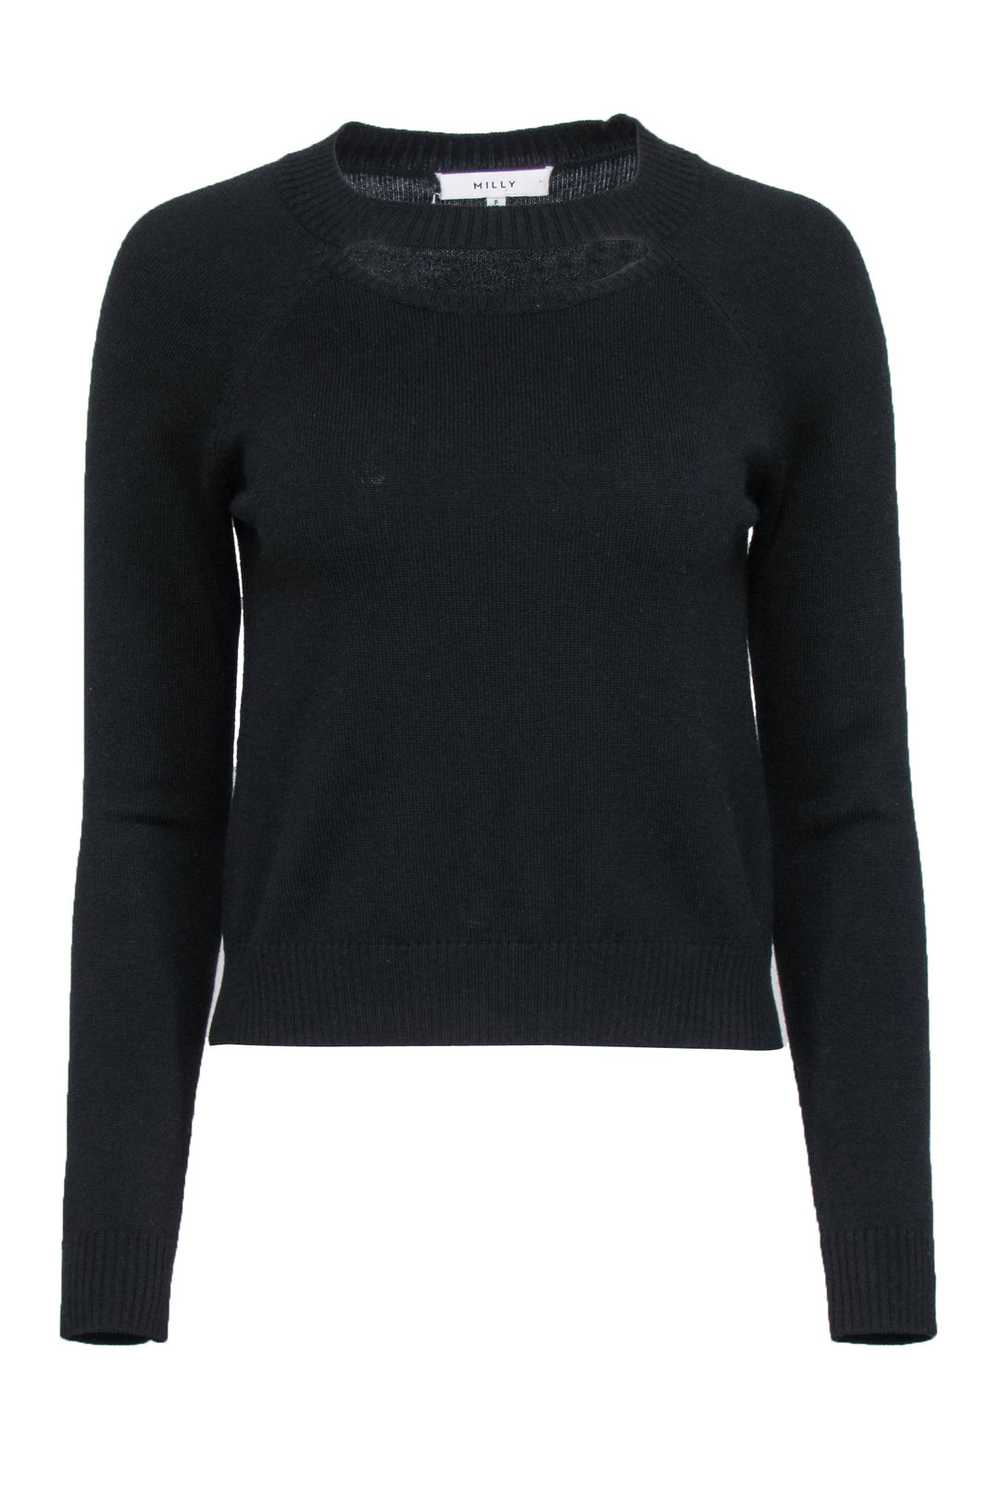 Milly - Black Wool Sweater w/ Cutout Sz P - image 1